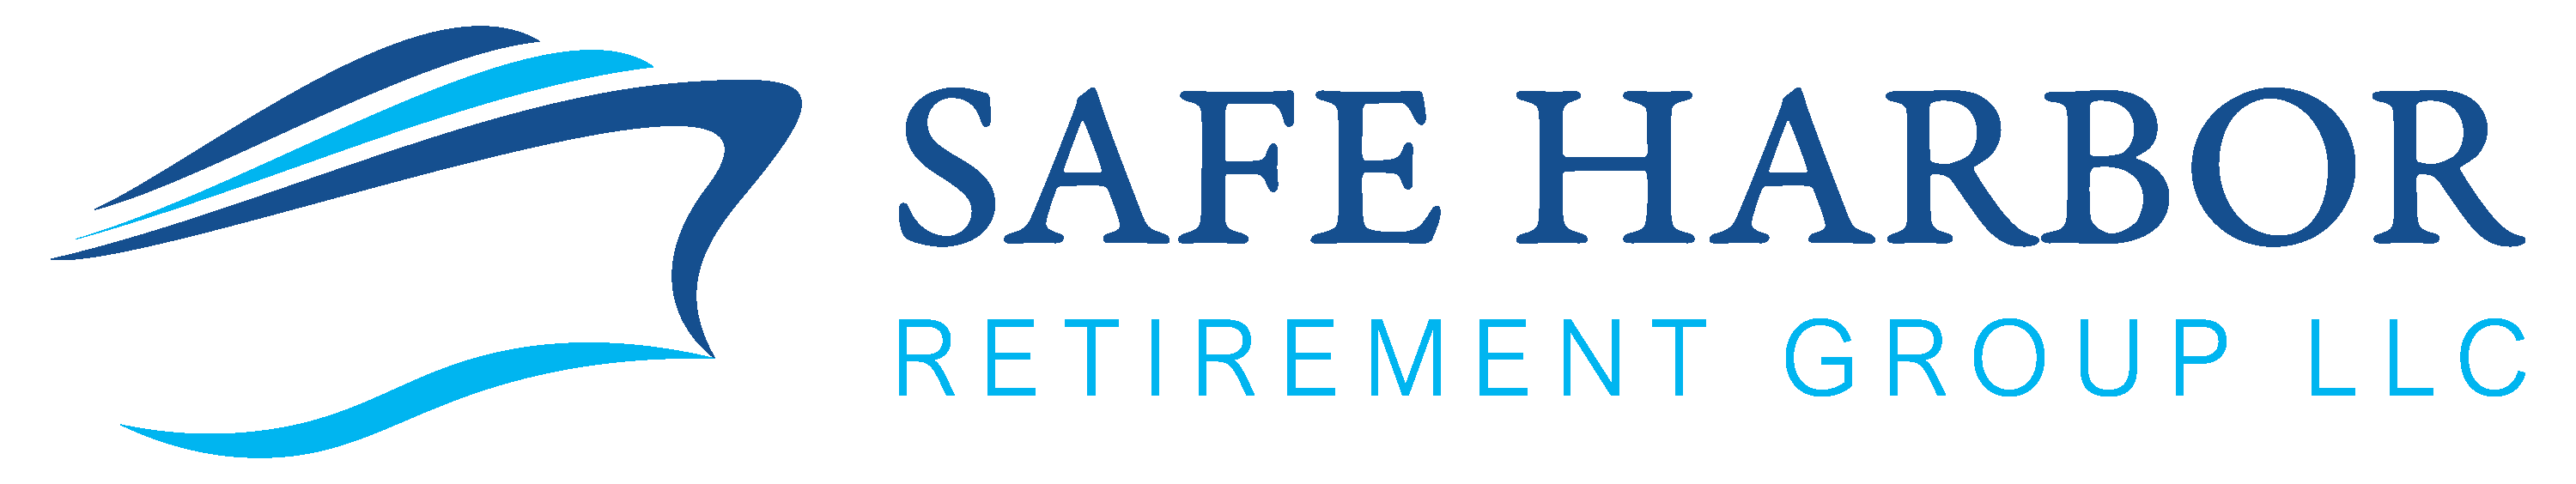 Safe Harbor Retirement Group LLC